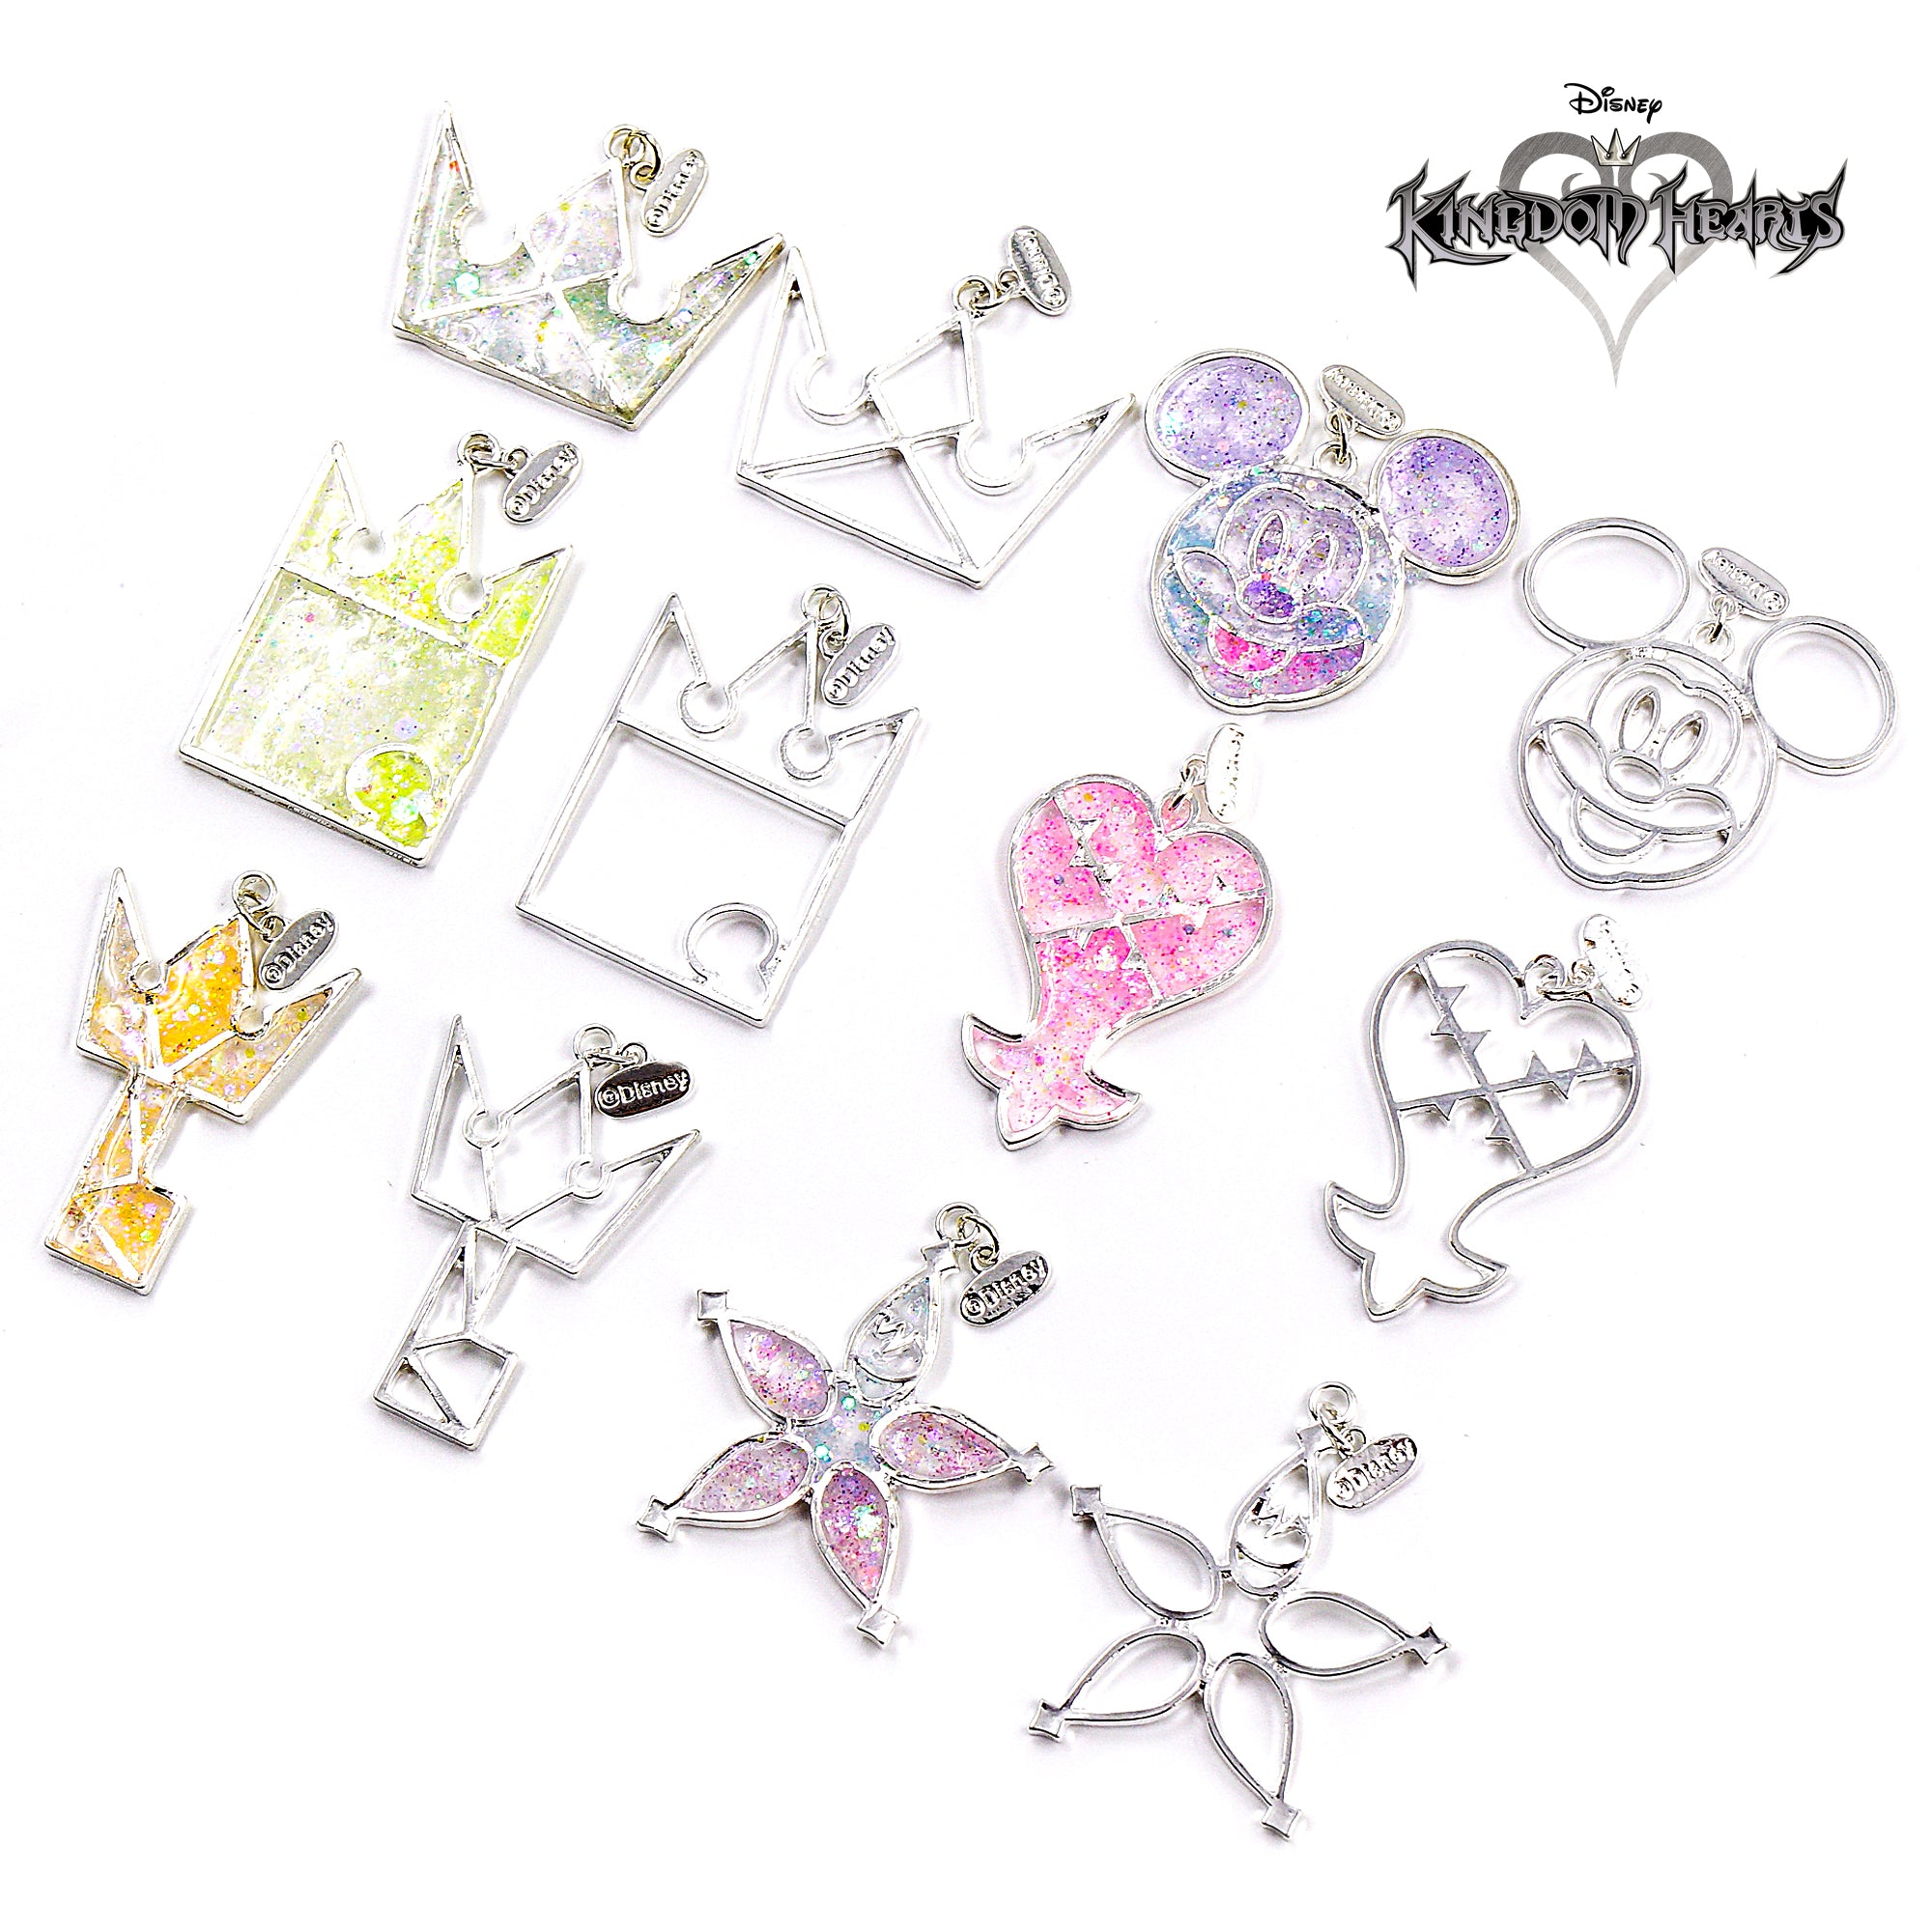 Disney Kingdom Hearts Silver Open Bezel Charms (12 pieces)